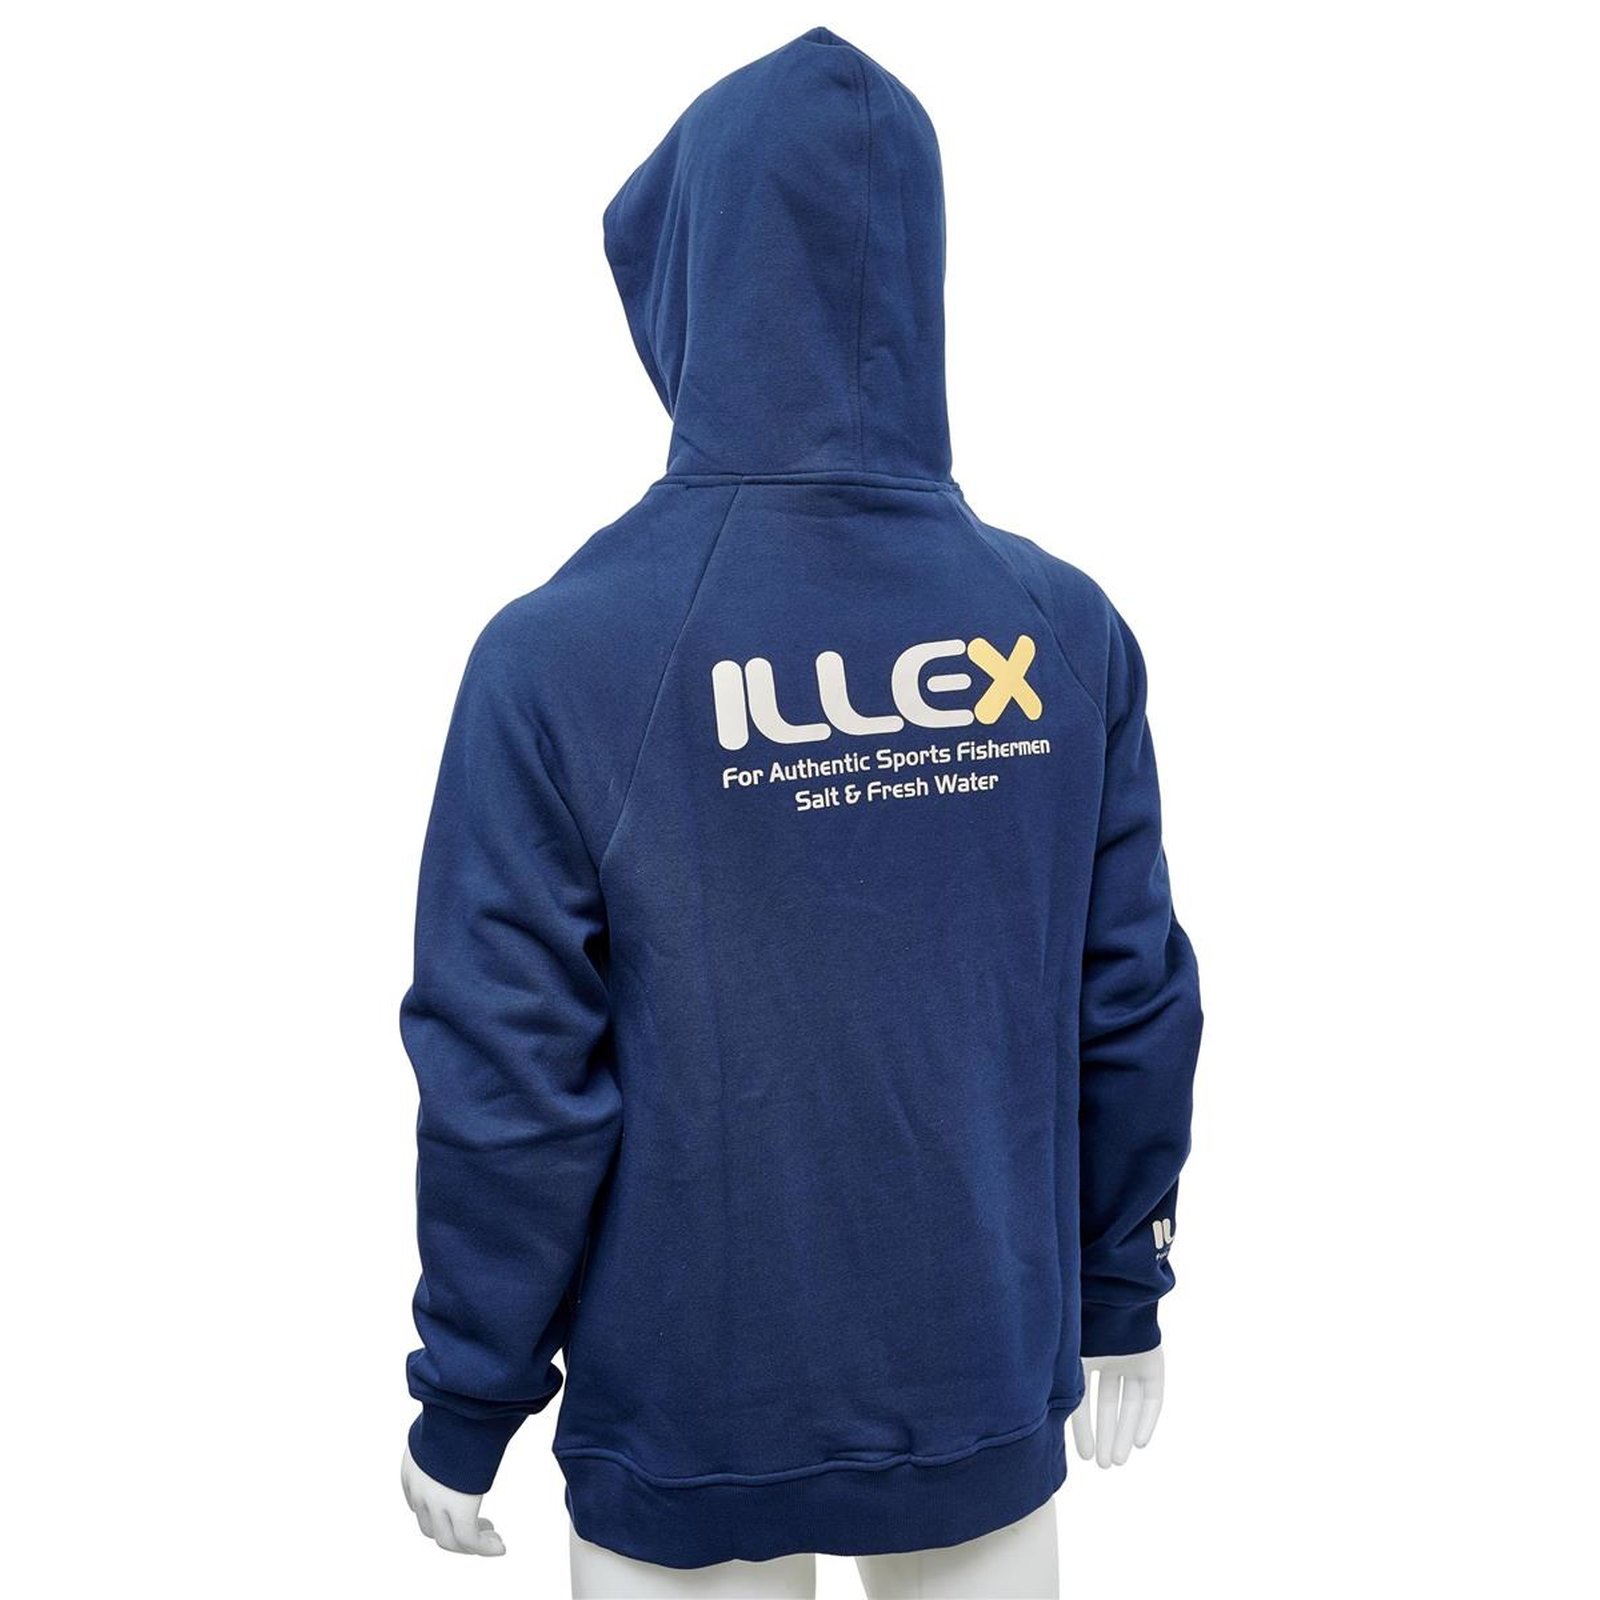 Illex Hoody XL